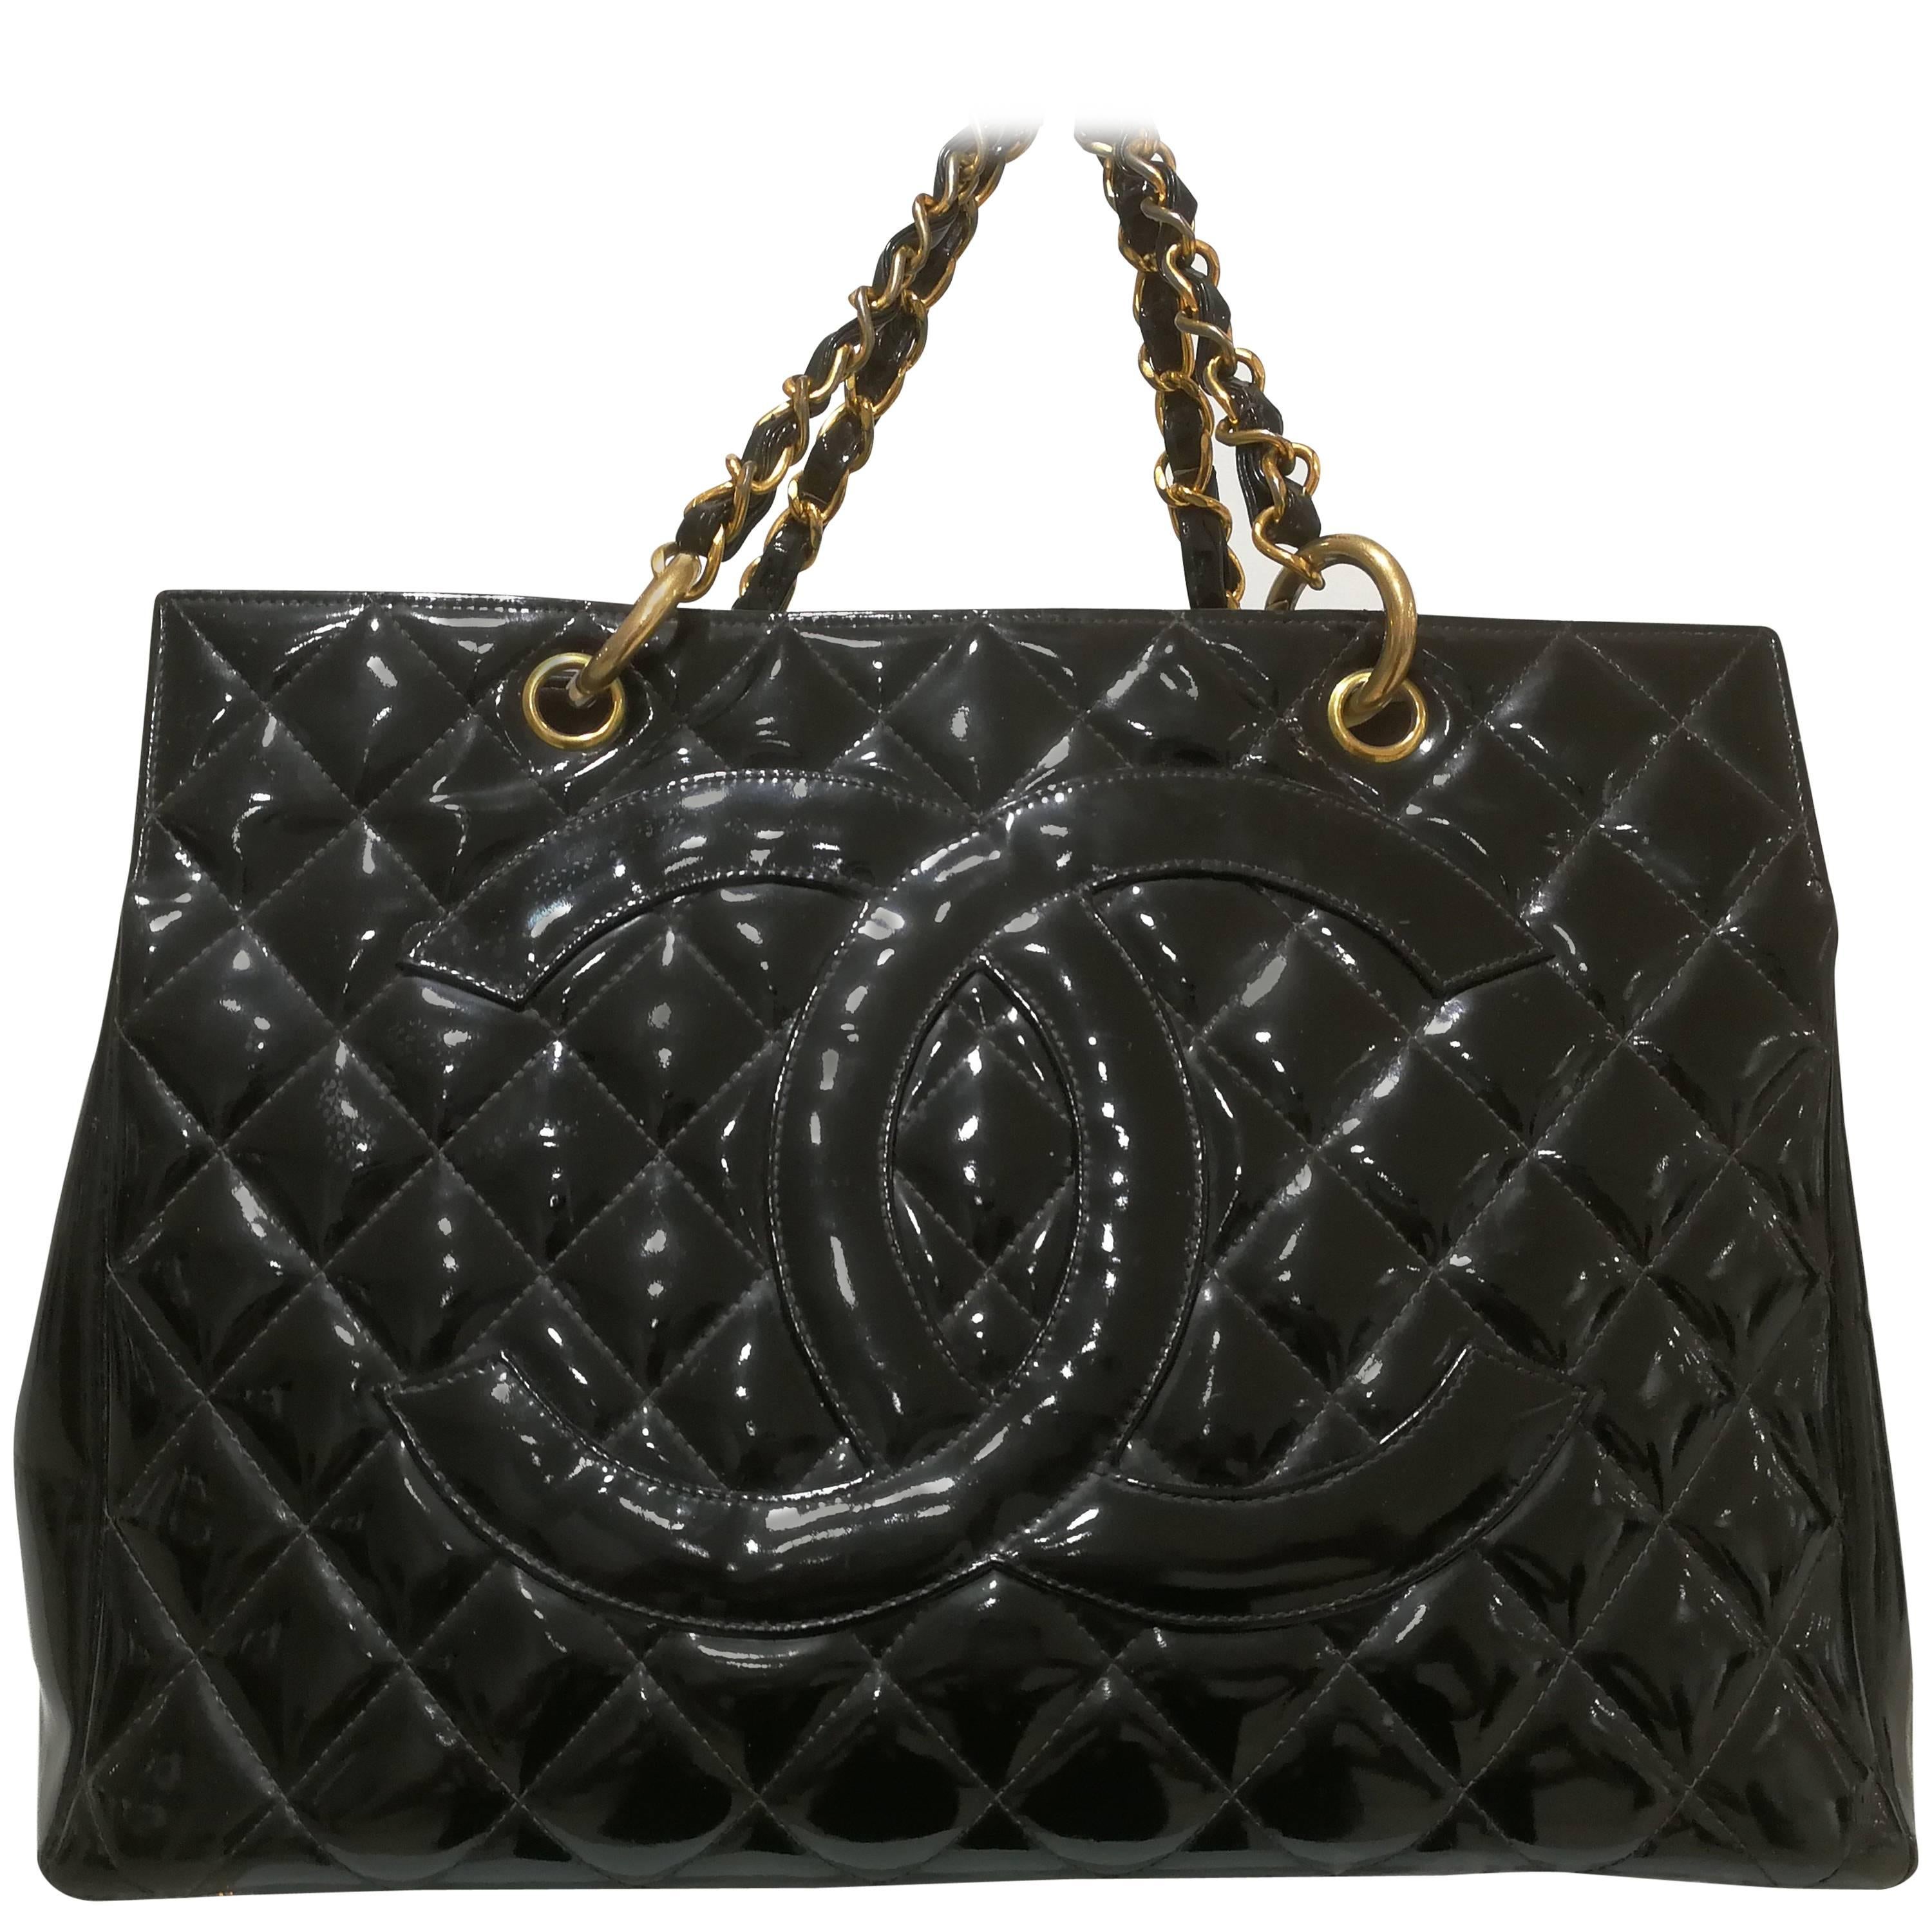 Chanel black patent leather gold hardware bag